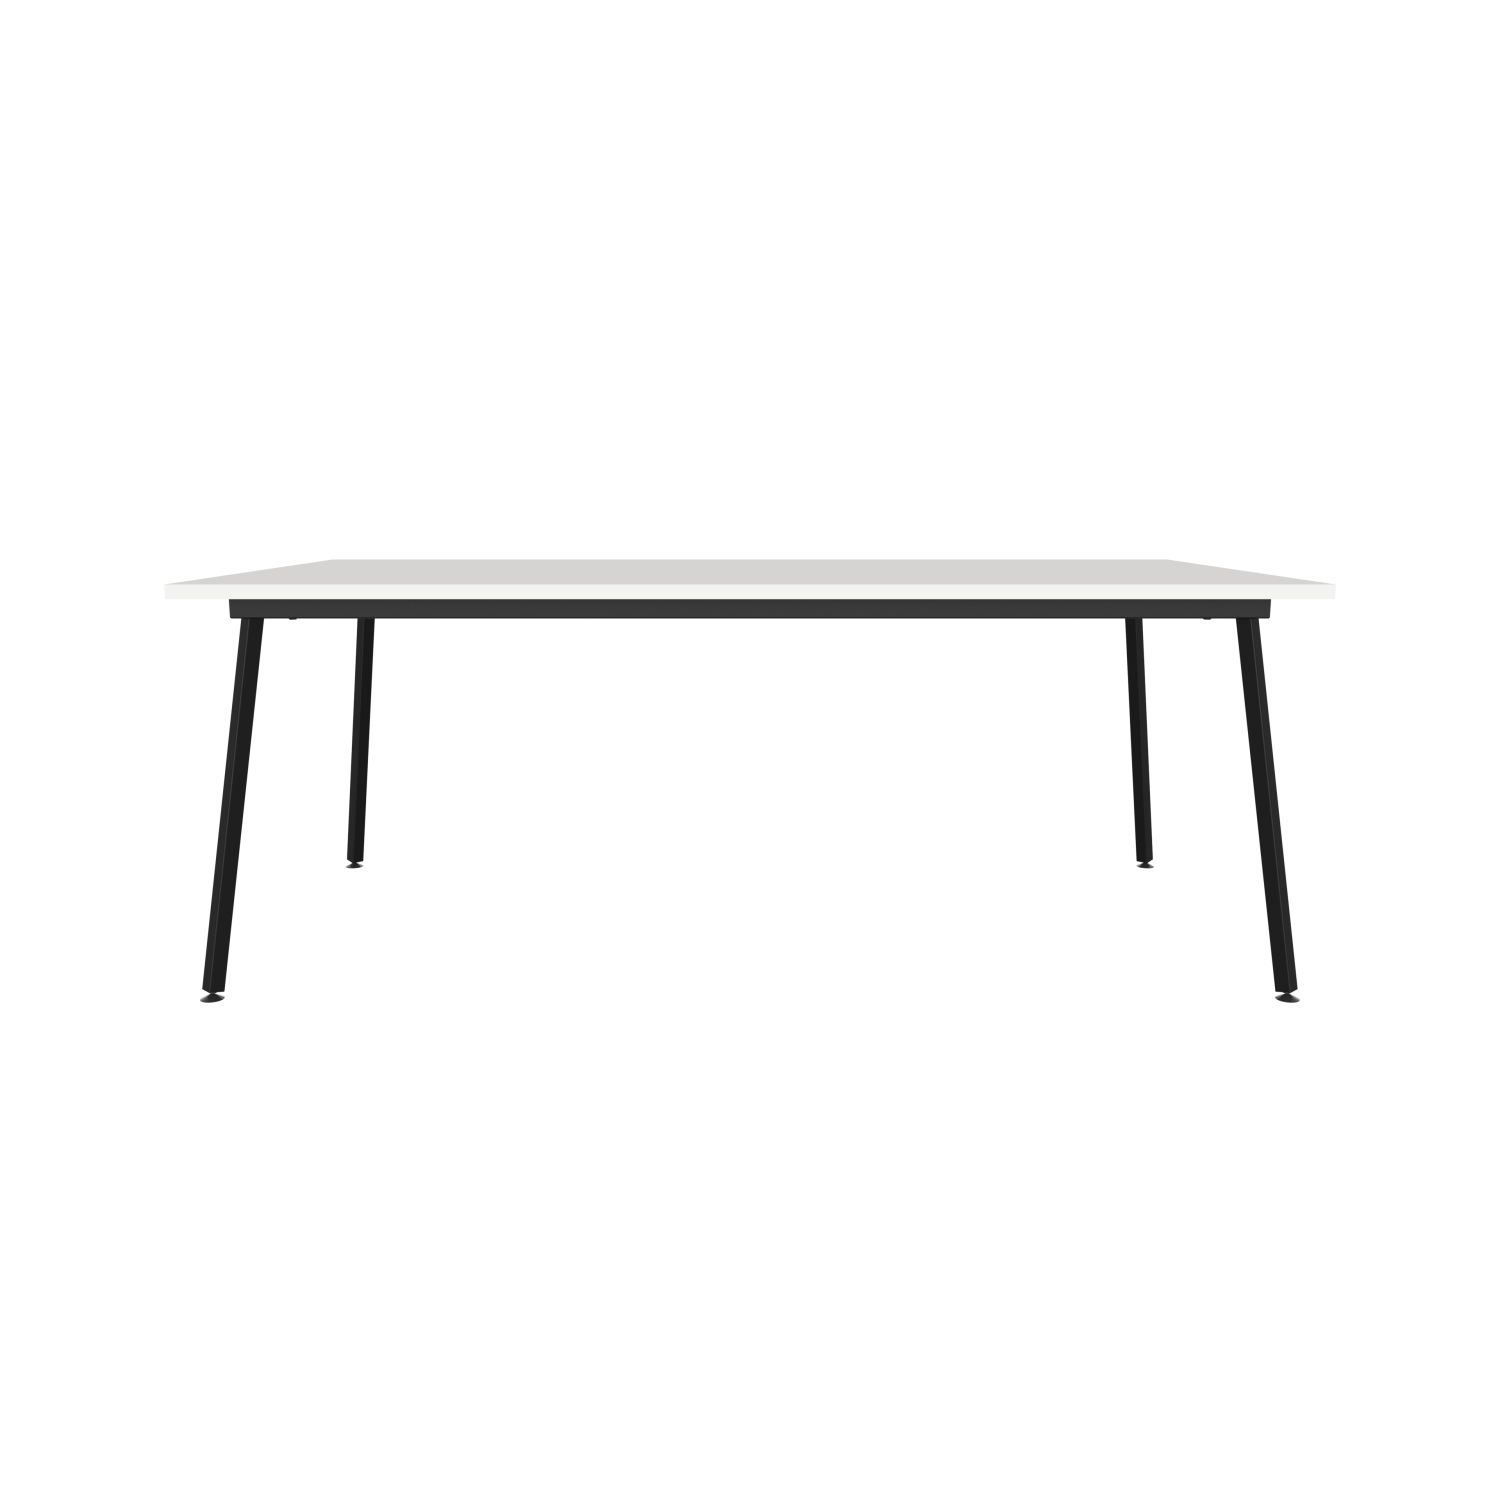 lensvelt maarten baas table fixed height 100x200 table top 26 mm top melamine white edge abs white black frame ral9005